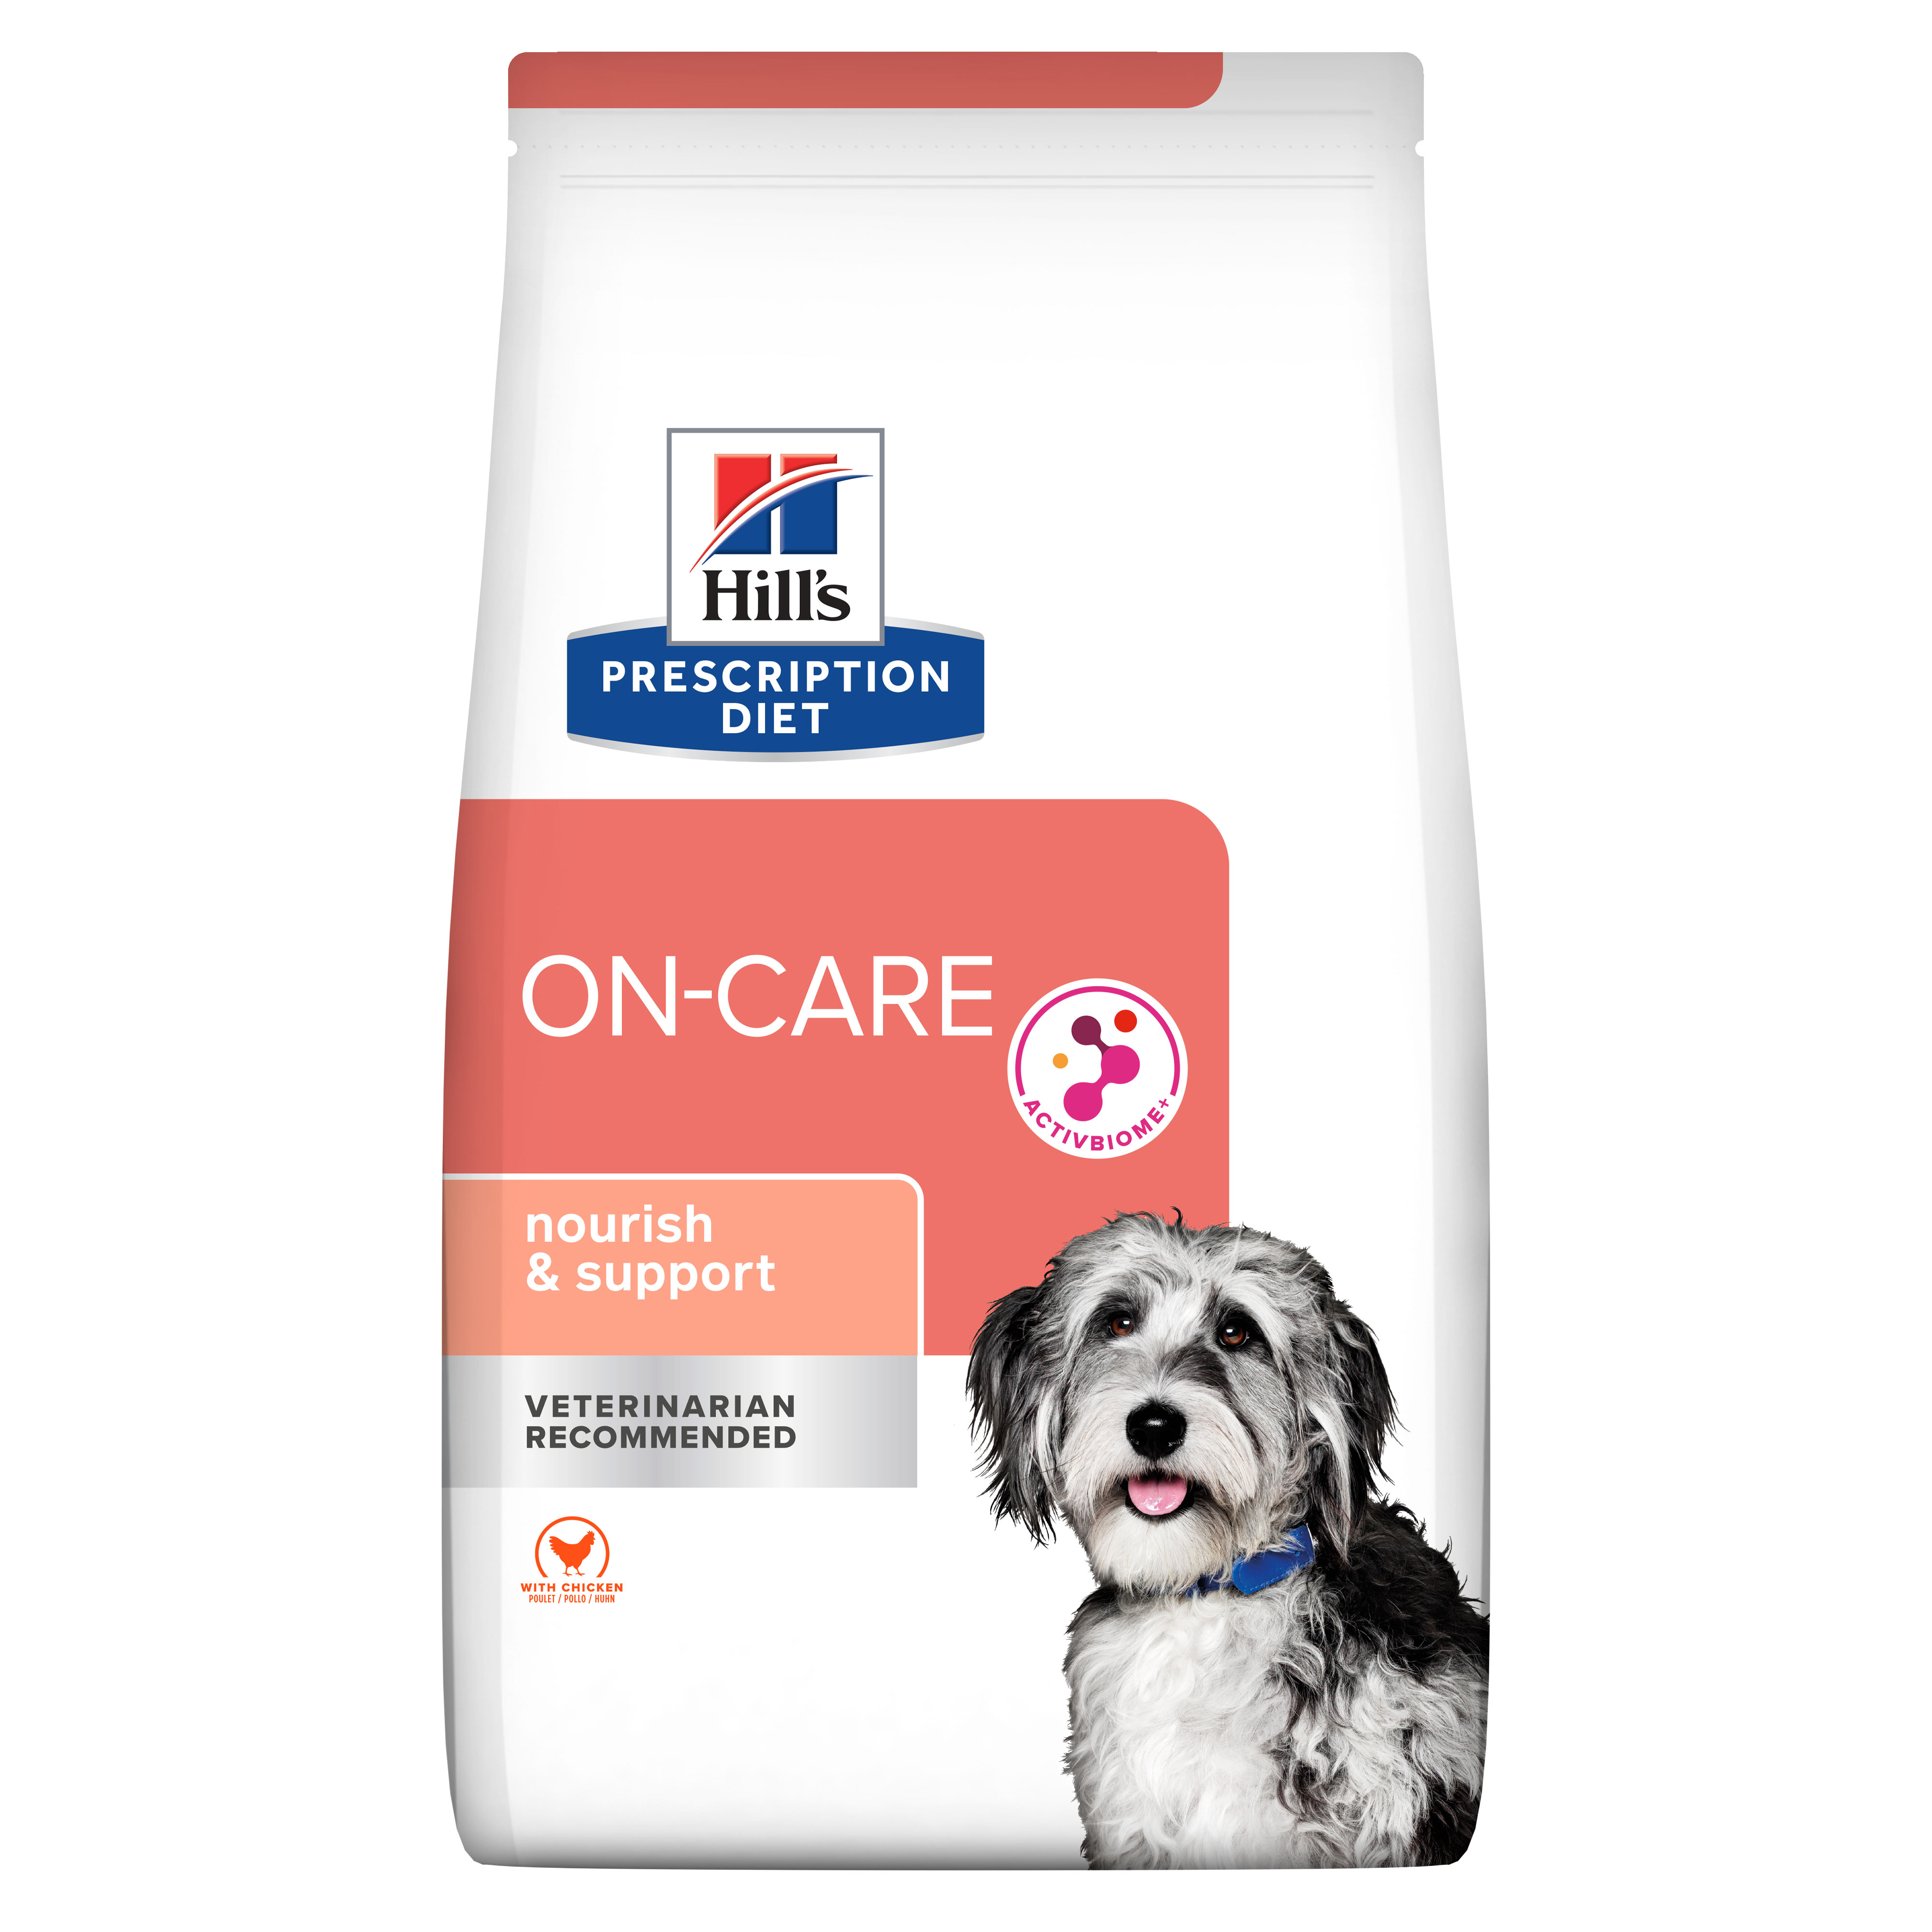 On-Care | Hill's Prescription Diet תמיכה בסרטן לכלב, 4 ק"ג